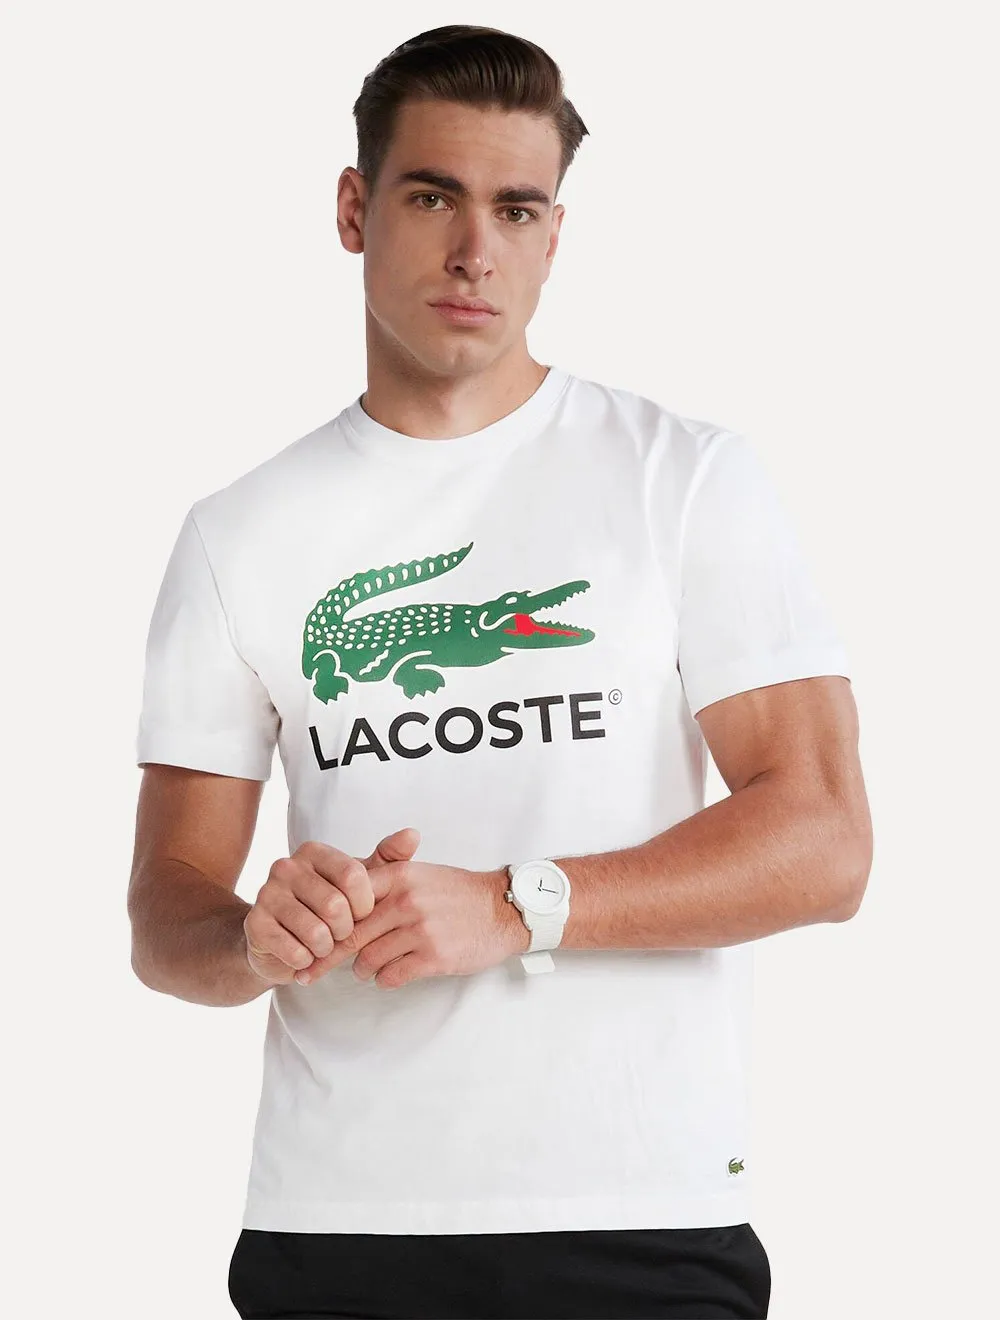 Camiseta Lacoste Masculina Jersey Croco Signature Logo Branca